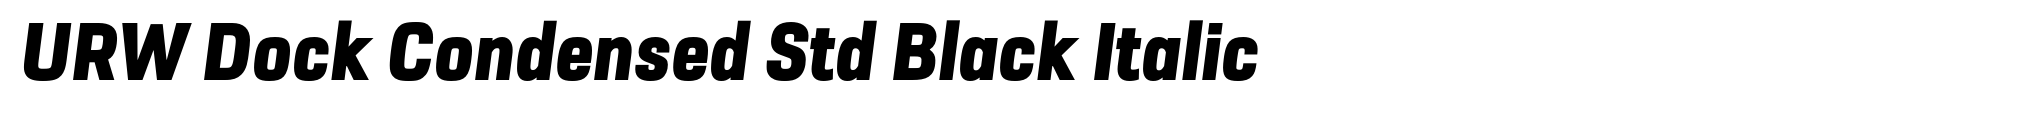 URW Dock Condensed Std Black Italic image